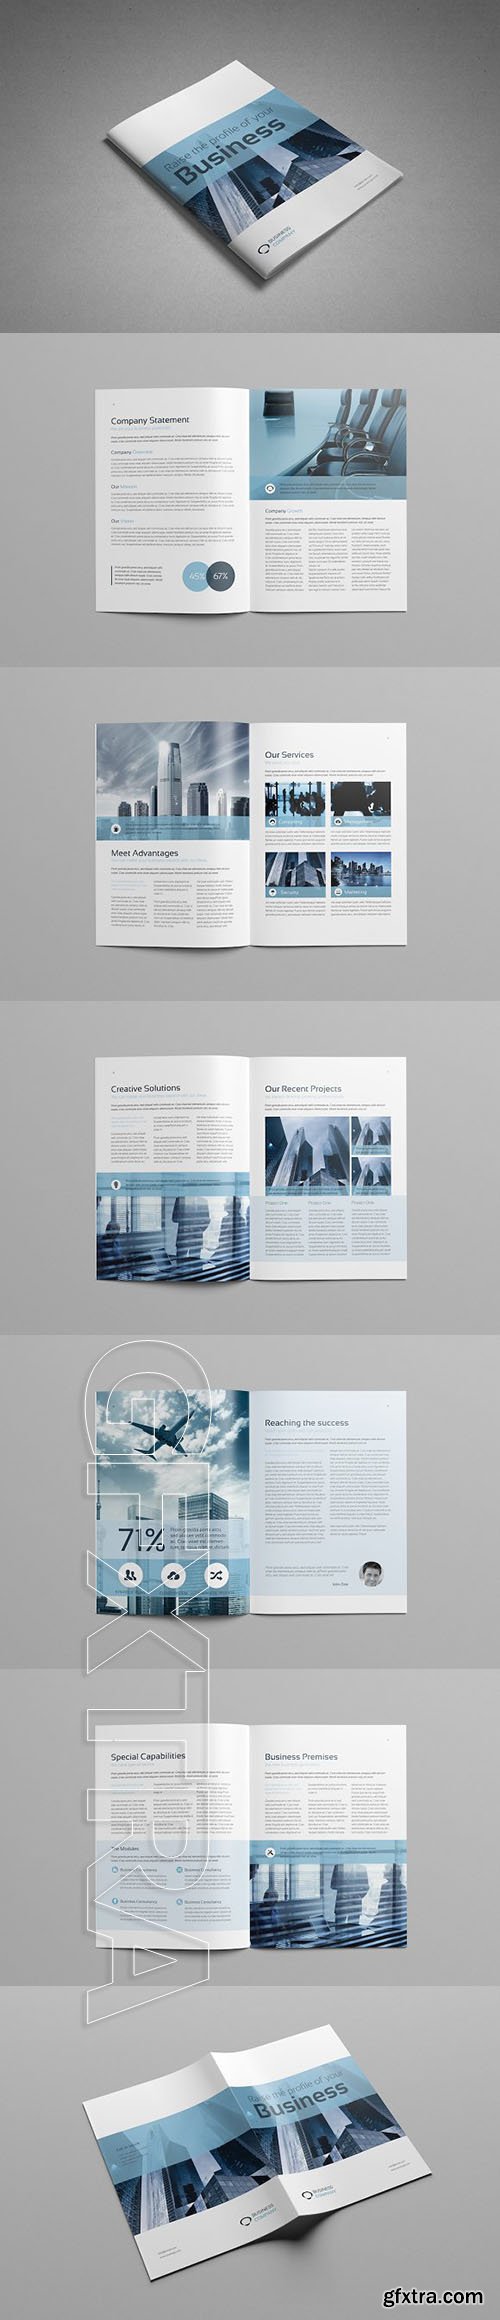 CreativeMarket - Corporate Brochure Template 1935903